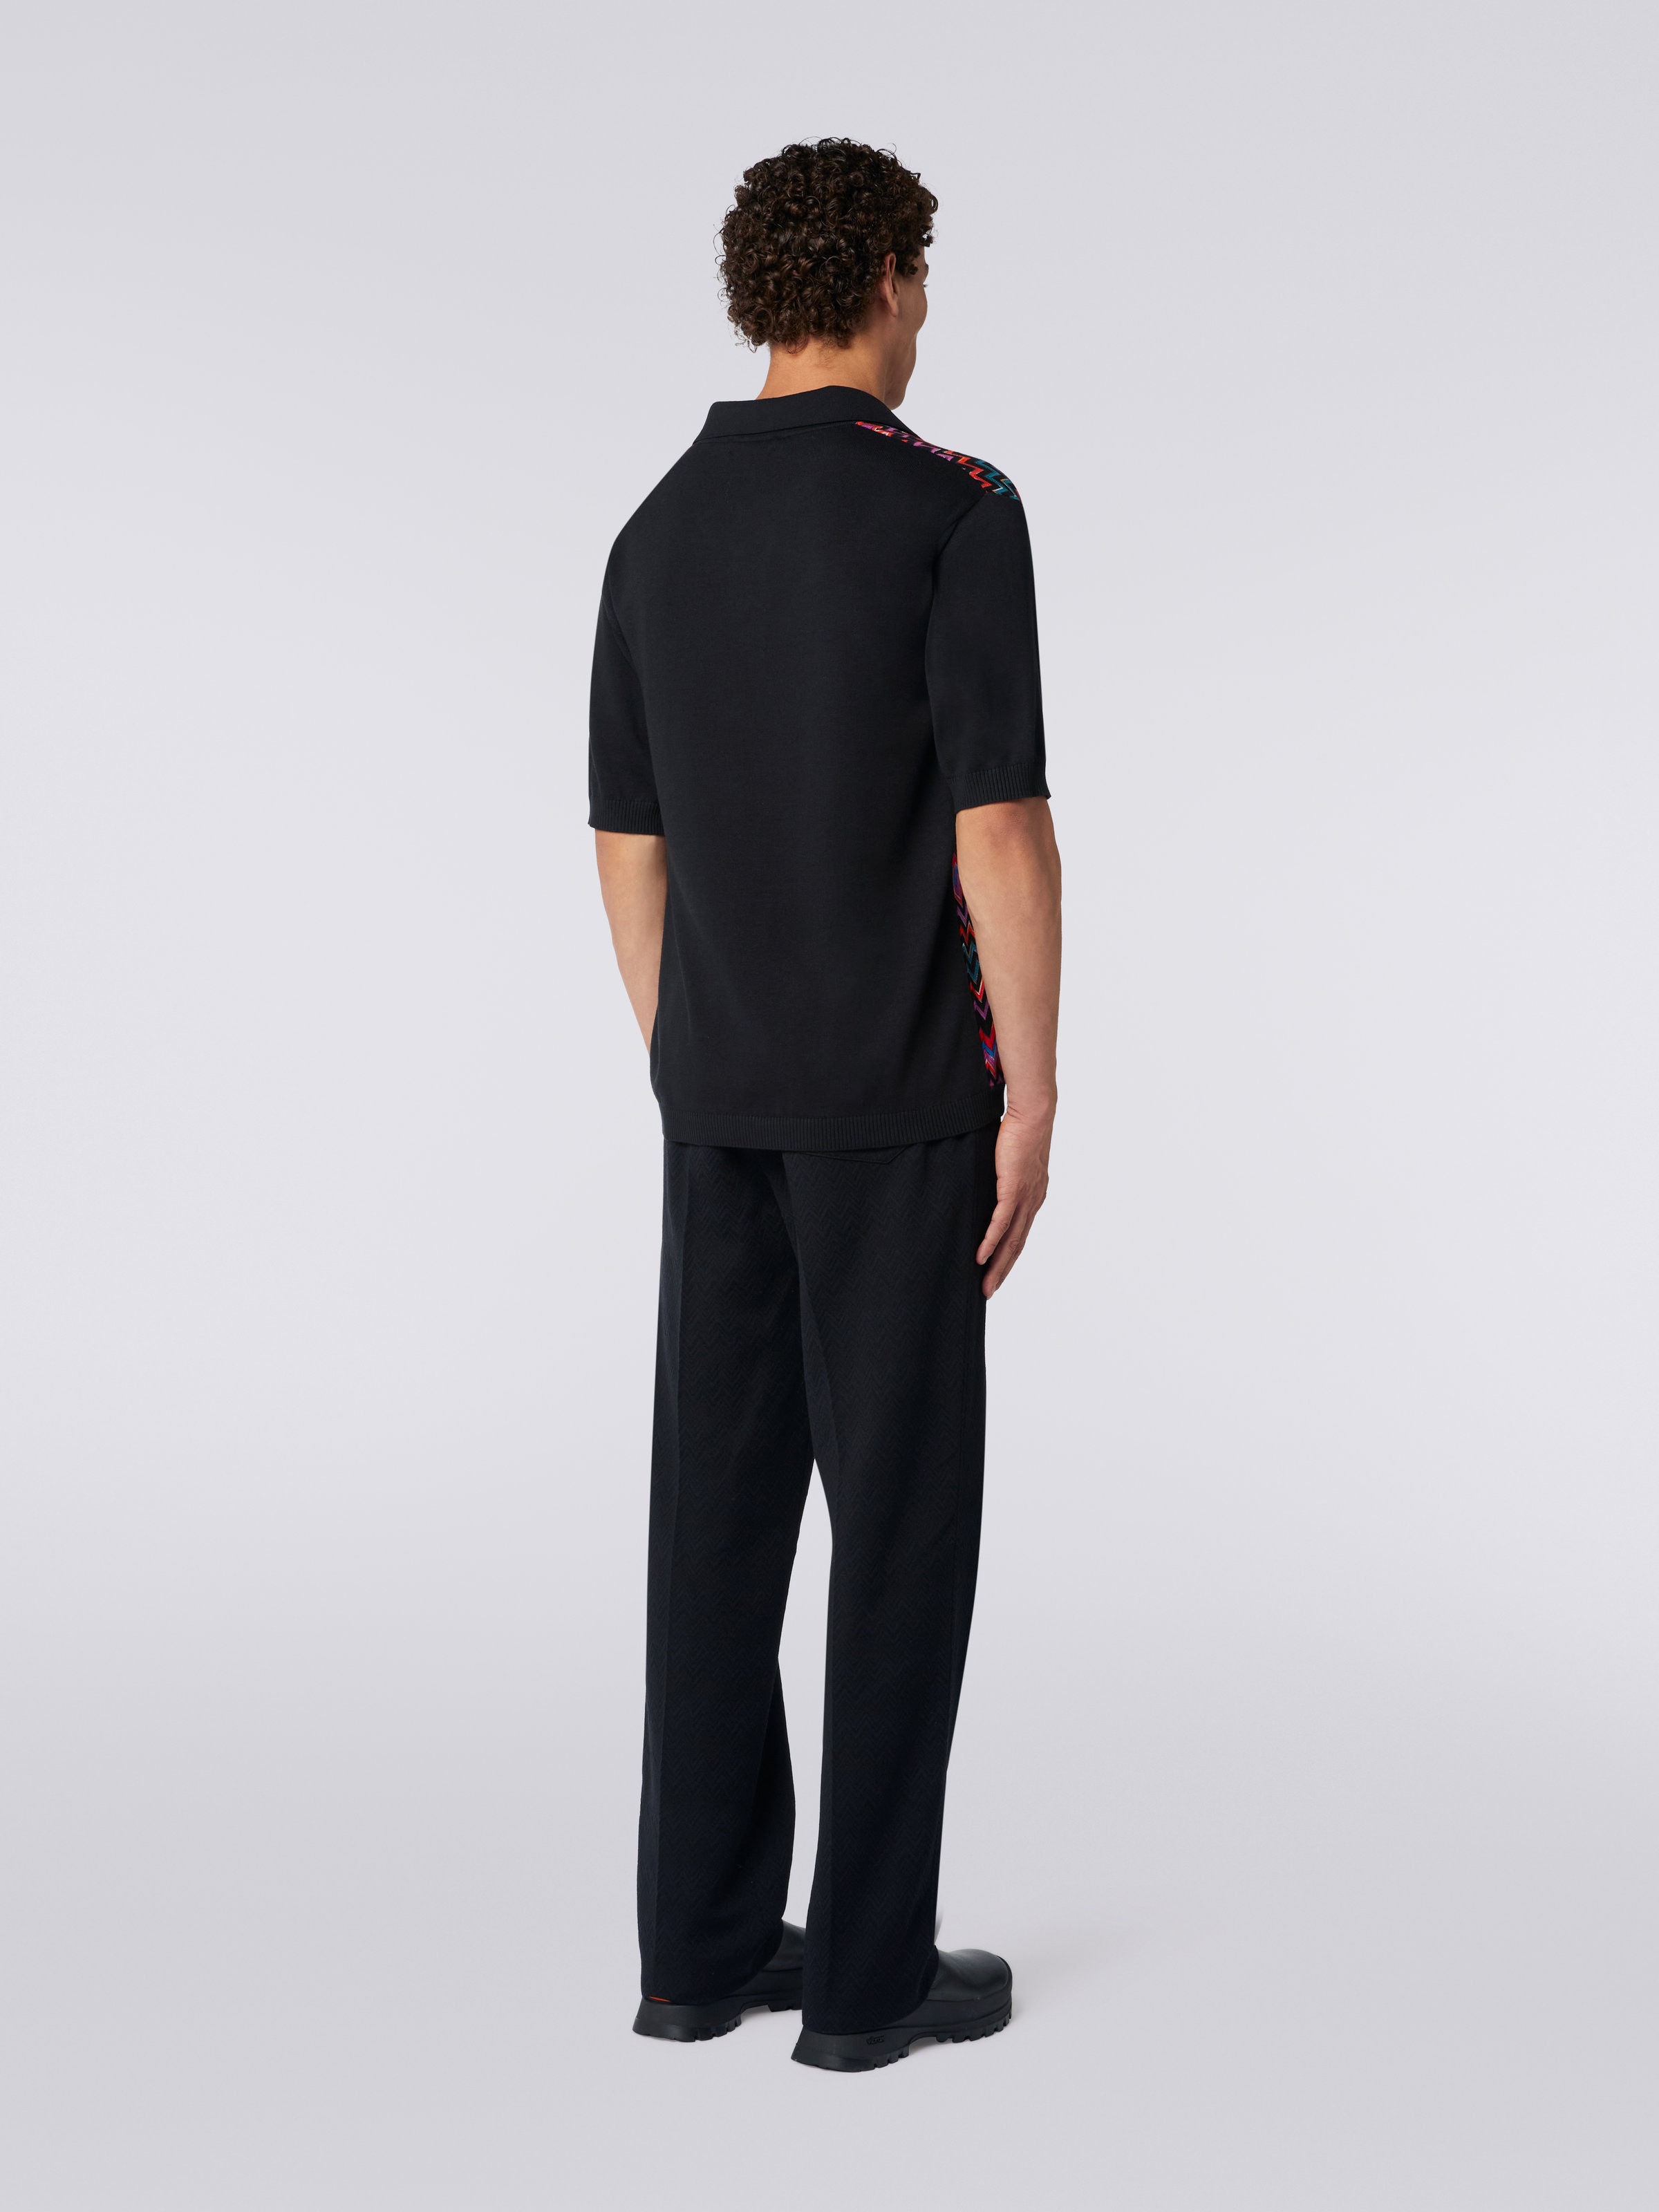 Short-sleeved polo shirt in cotton, viscose and silk chevron, Black    - 3